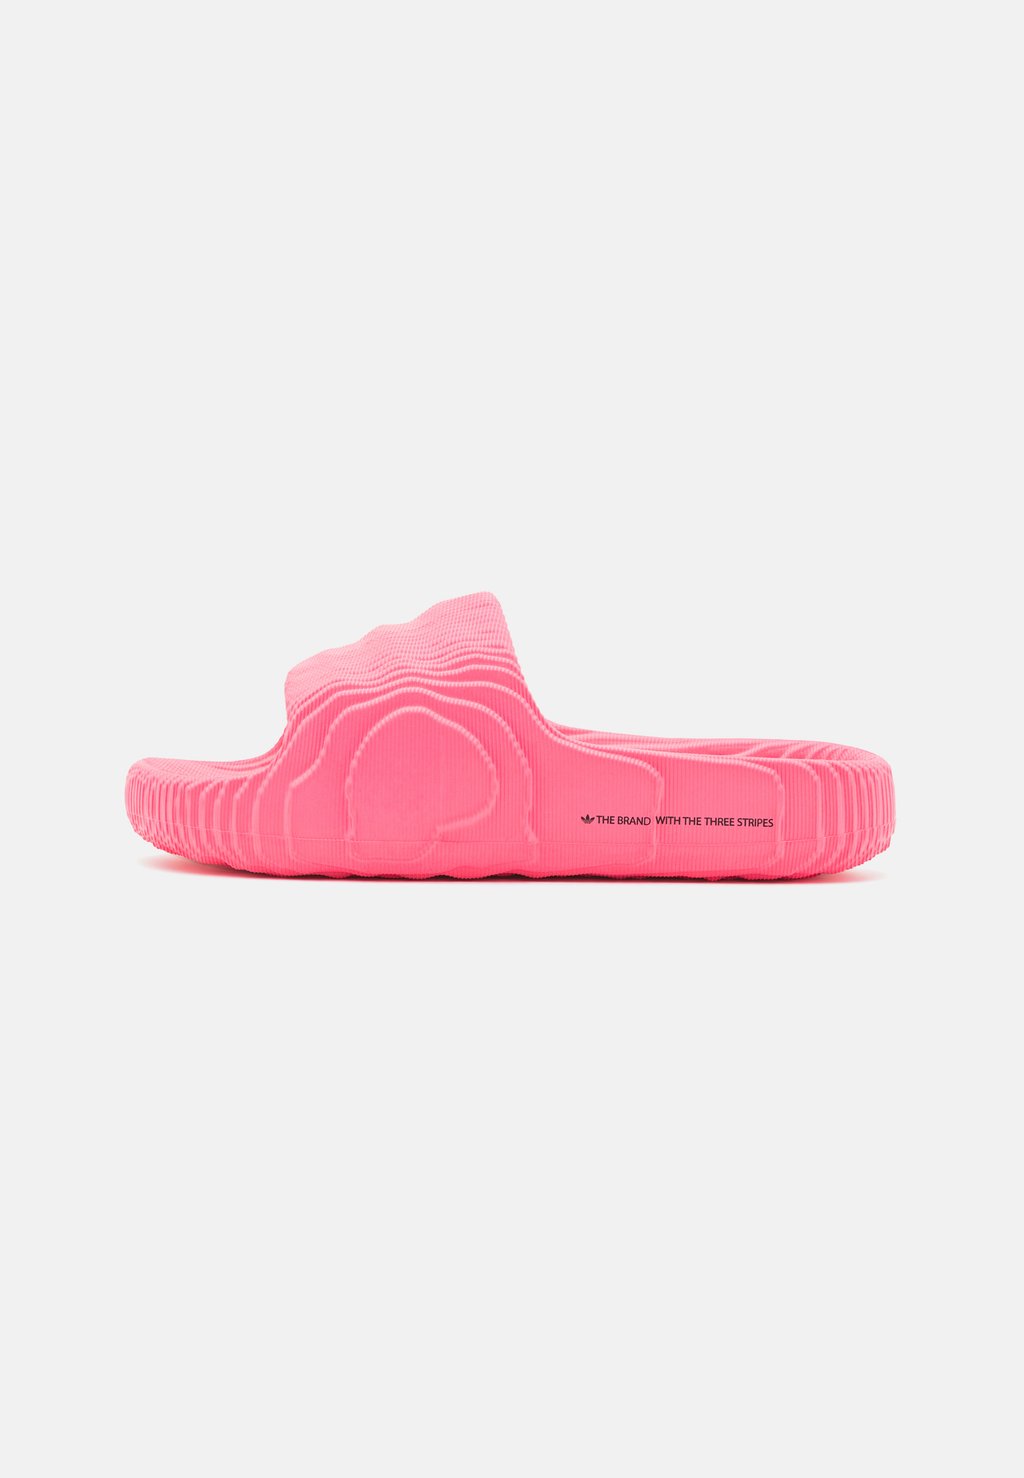 Пляжные тапочки Adilette 22 adidas Originals, цвет lucid pink/core black шлепанцы adidas sportswear цвет lucid pink bliss pink lucid pink